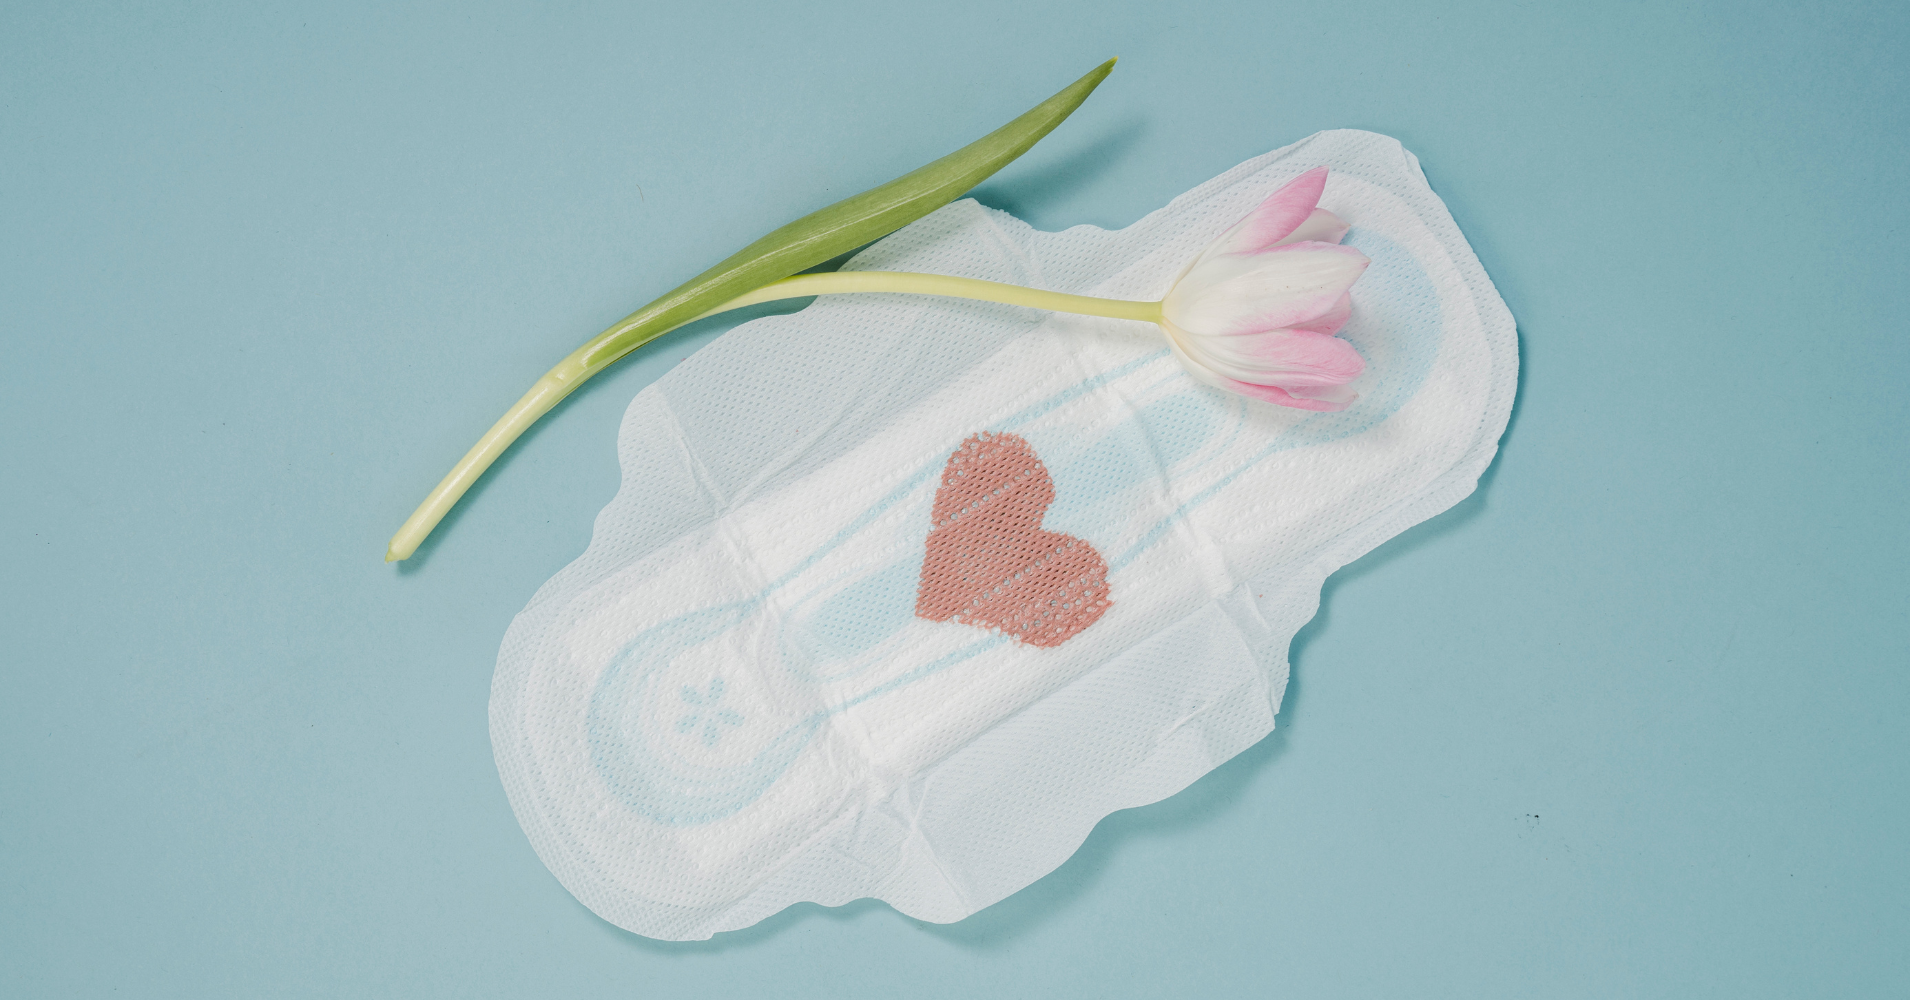 AqFresh™ Menstrual Products Consumer Insights Report